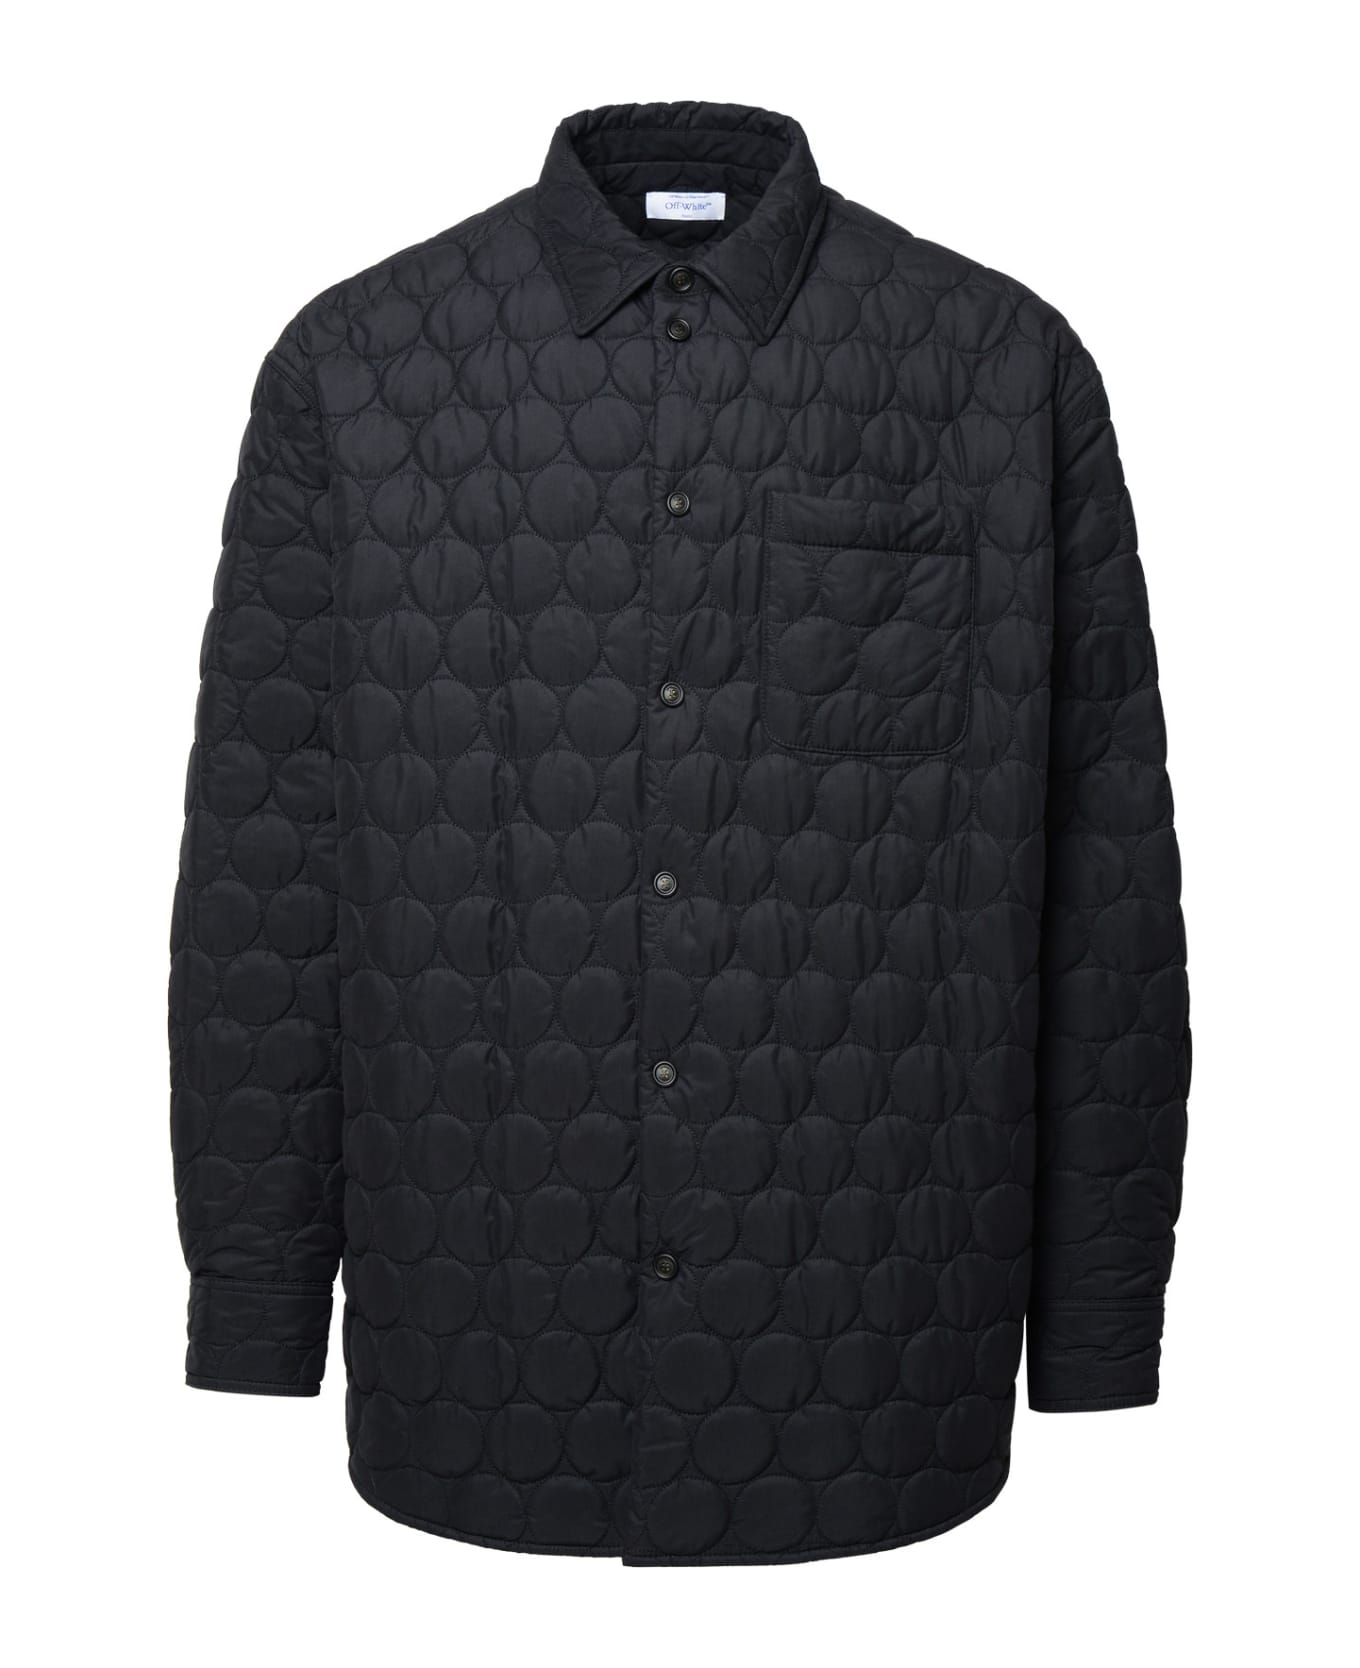 Off-White Polyester Jacket - Black ジャケット